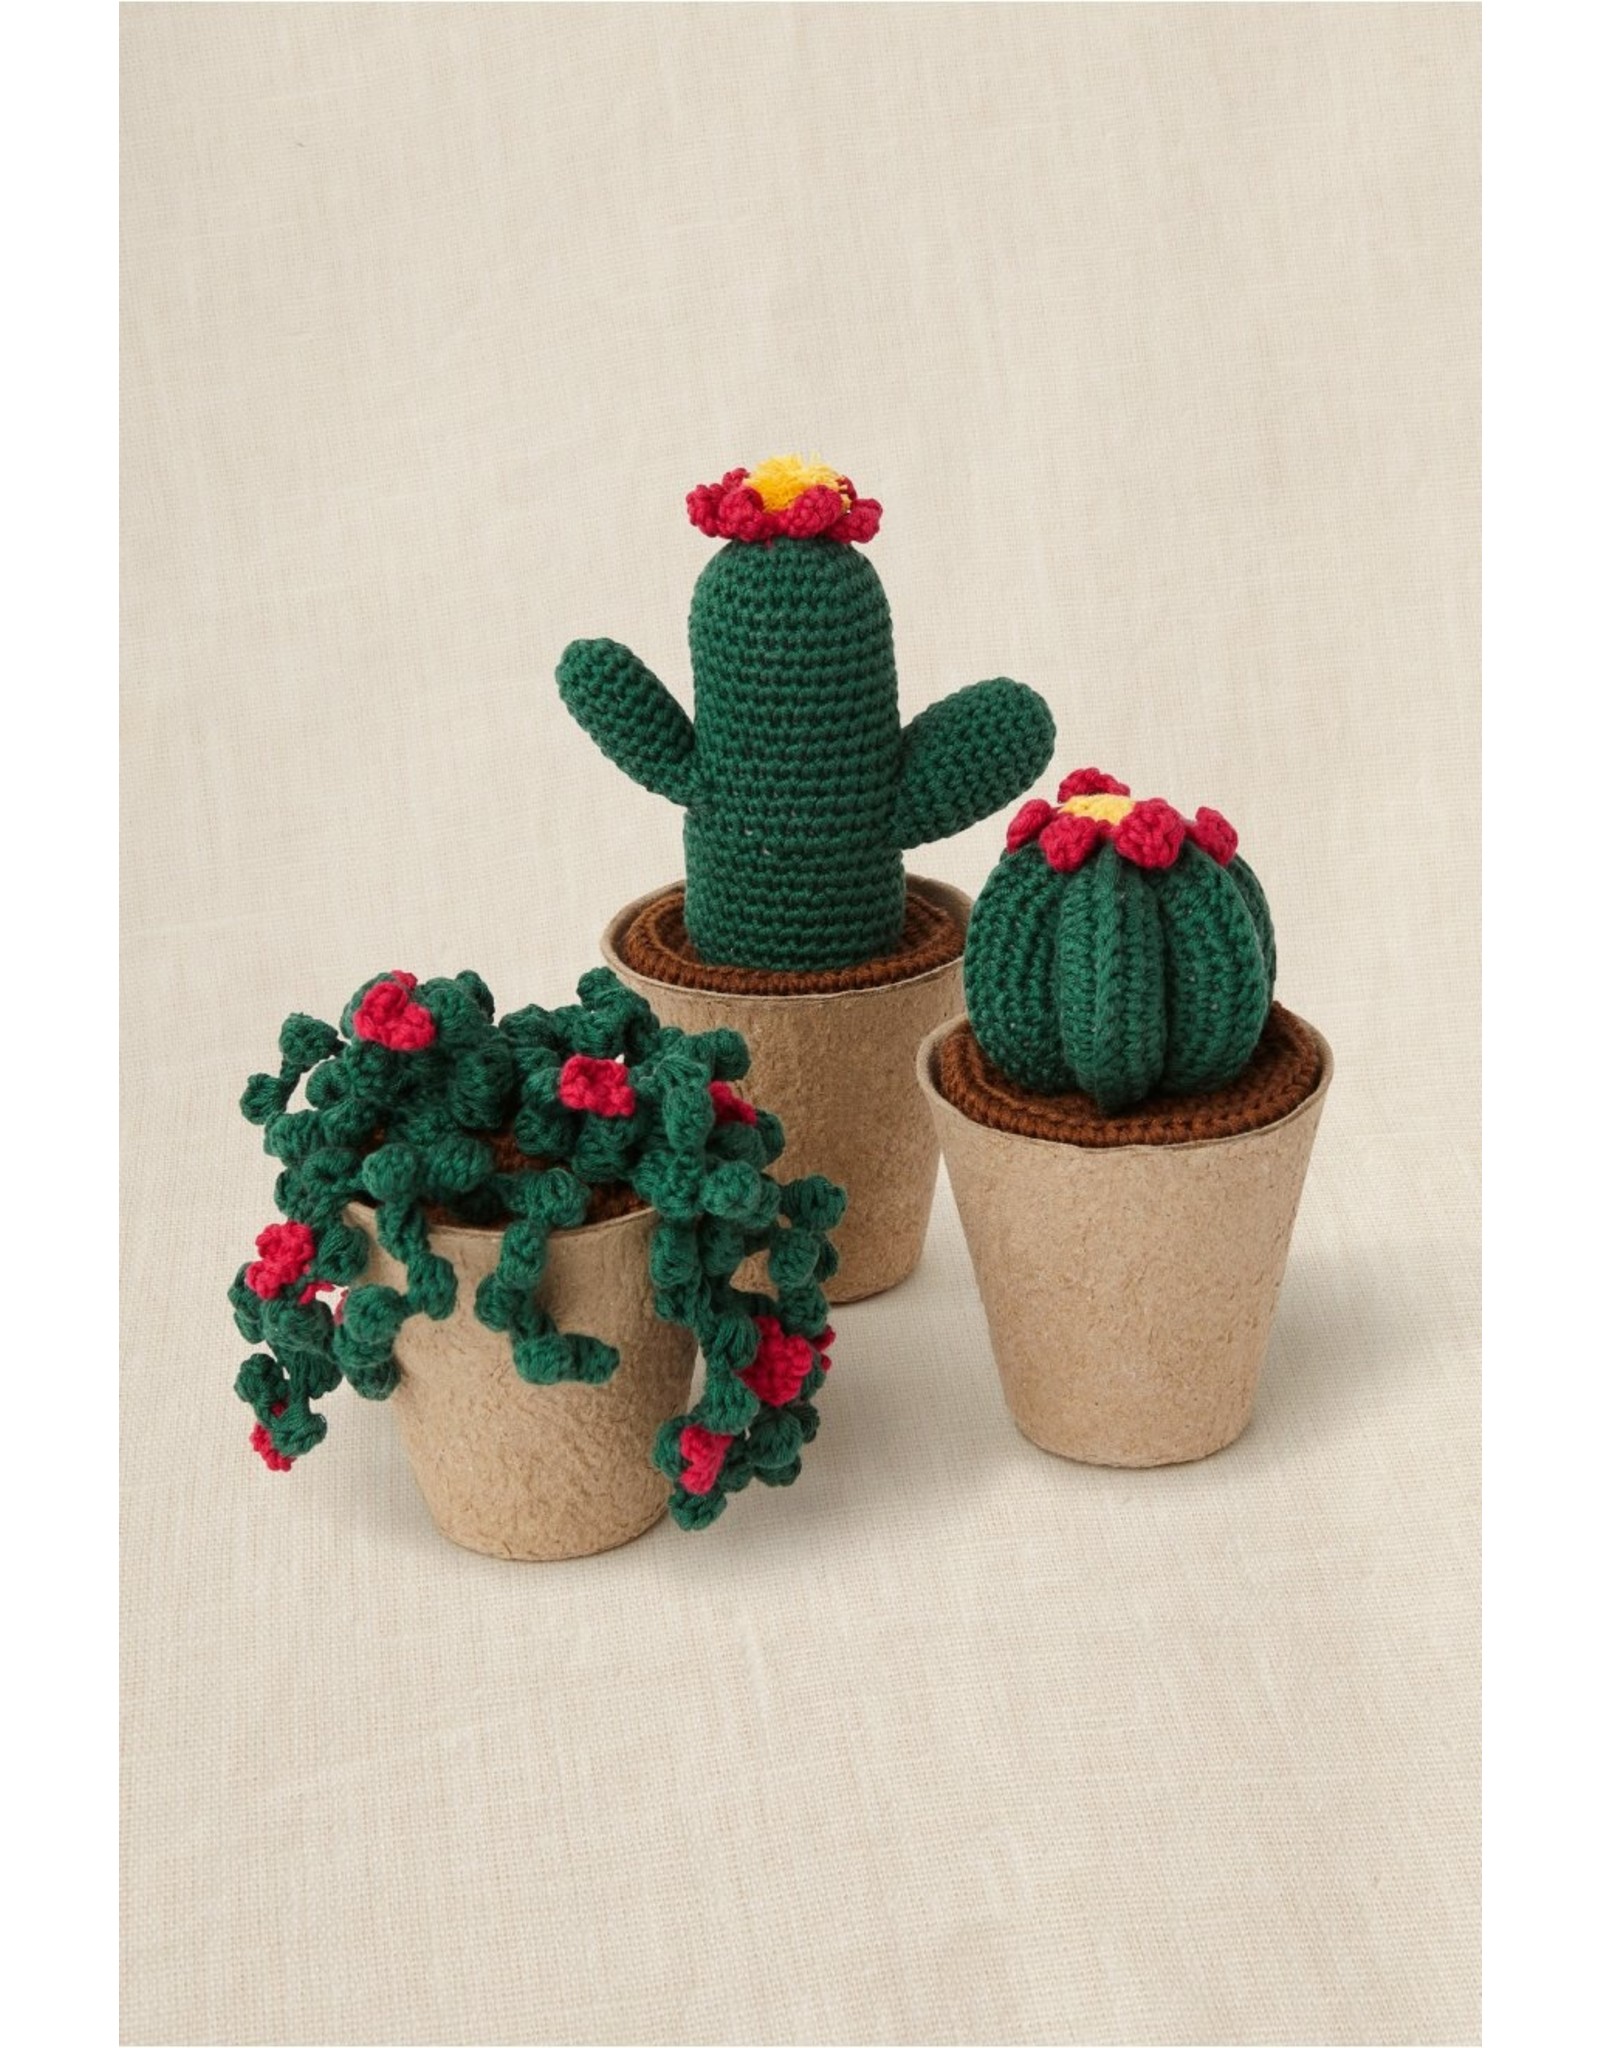 DMC DMC Gift of stitch Crochet Cactus kit